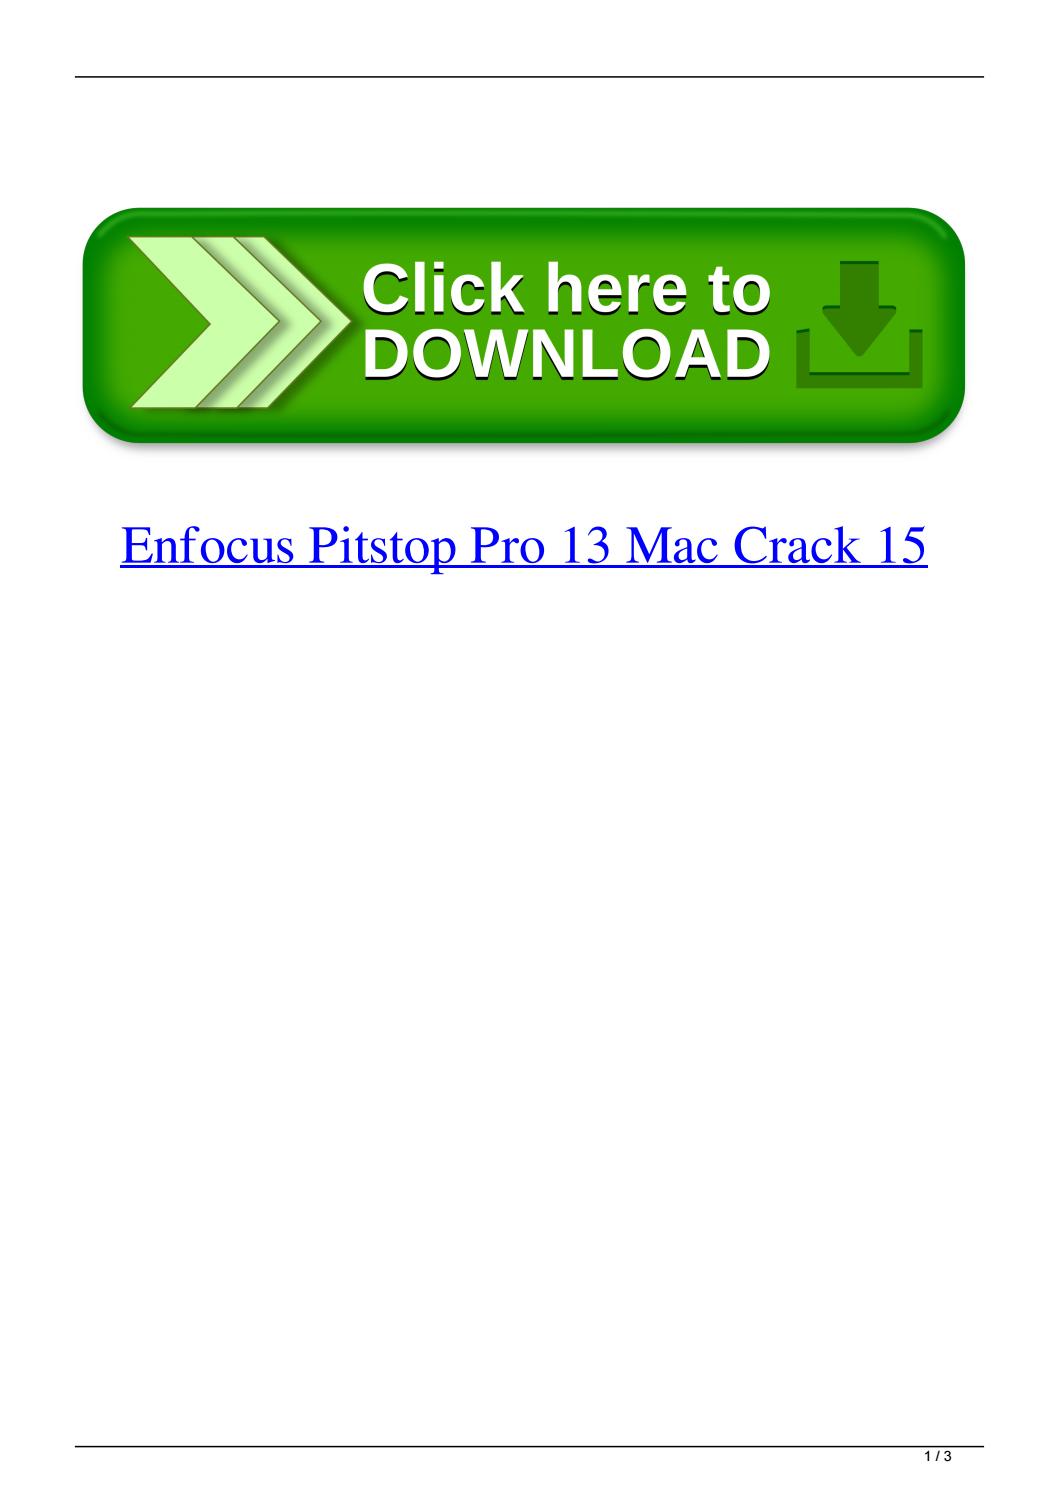 Pitstop pro 12 download mac